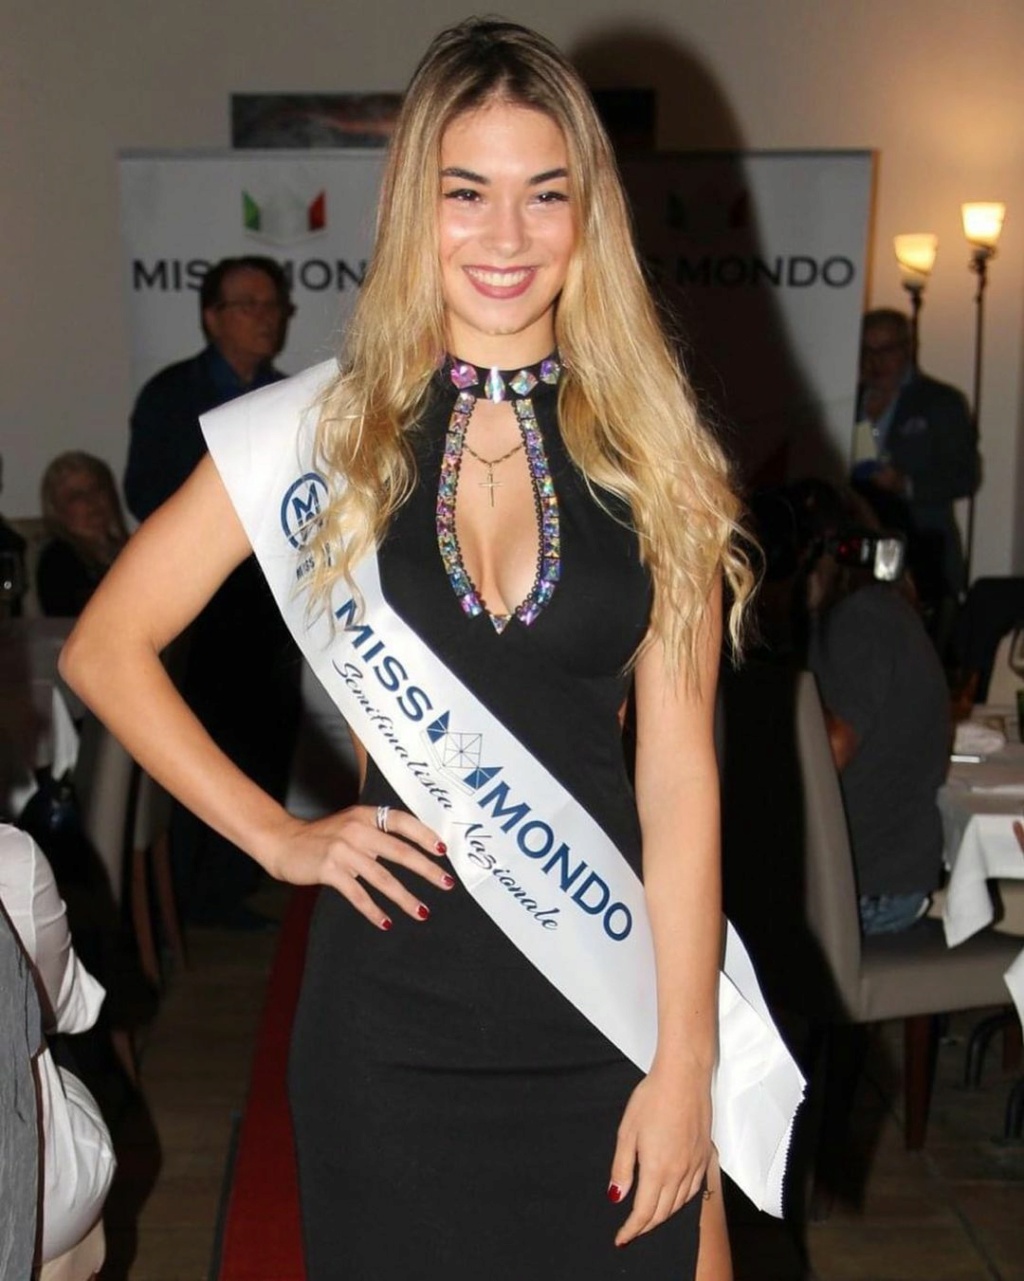 Miss Mondo Italia 2020/2021 is Claudia Motta - Lazio - Page 2 11919910